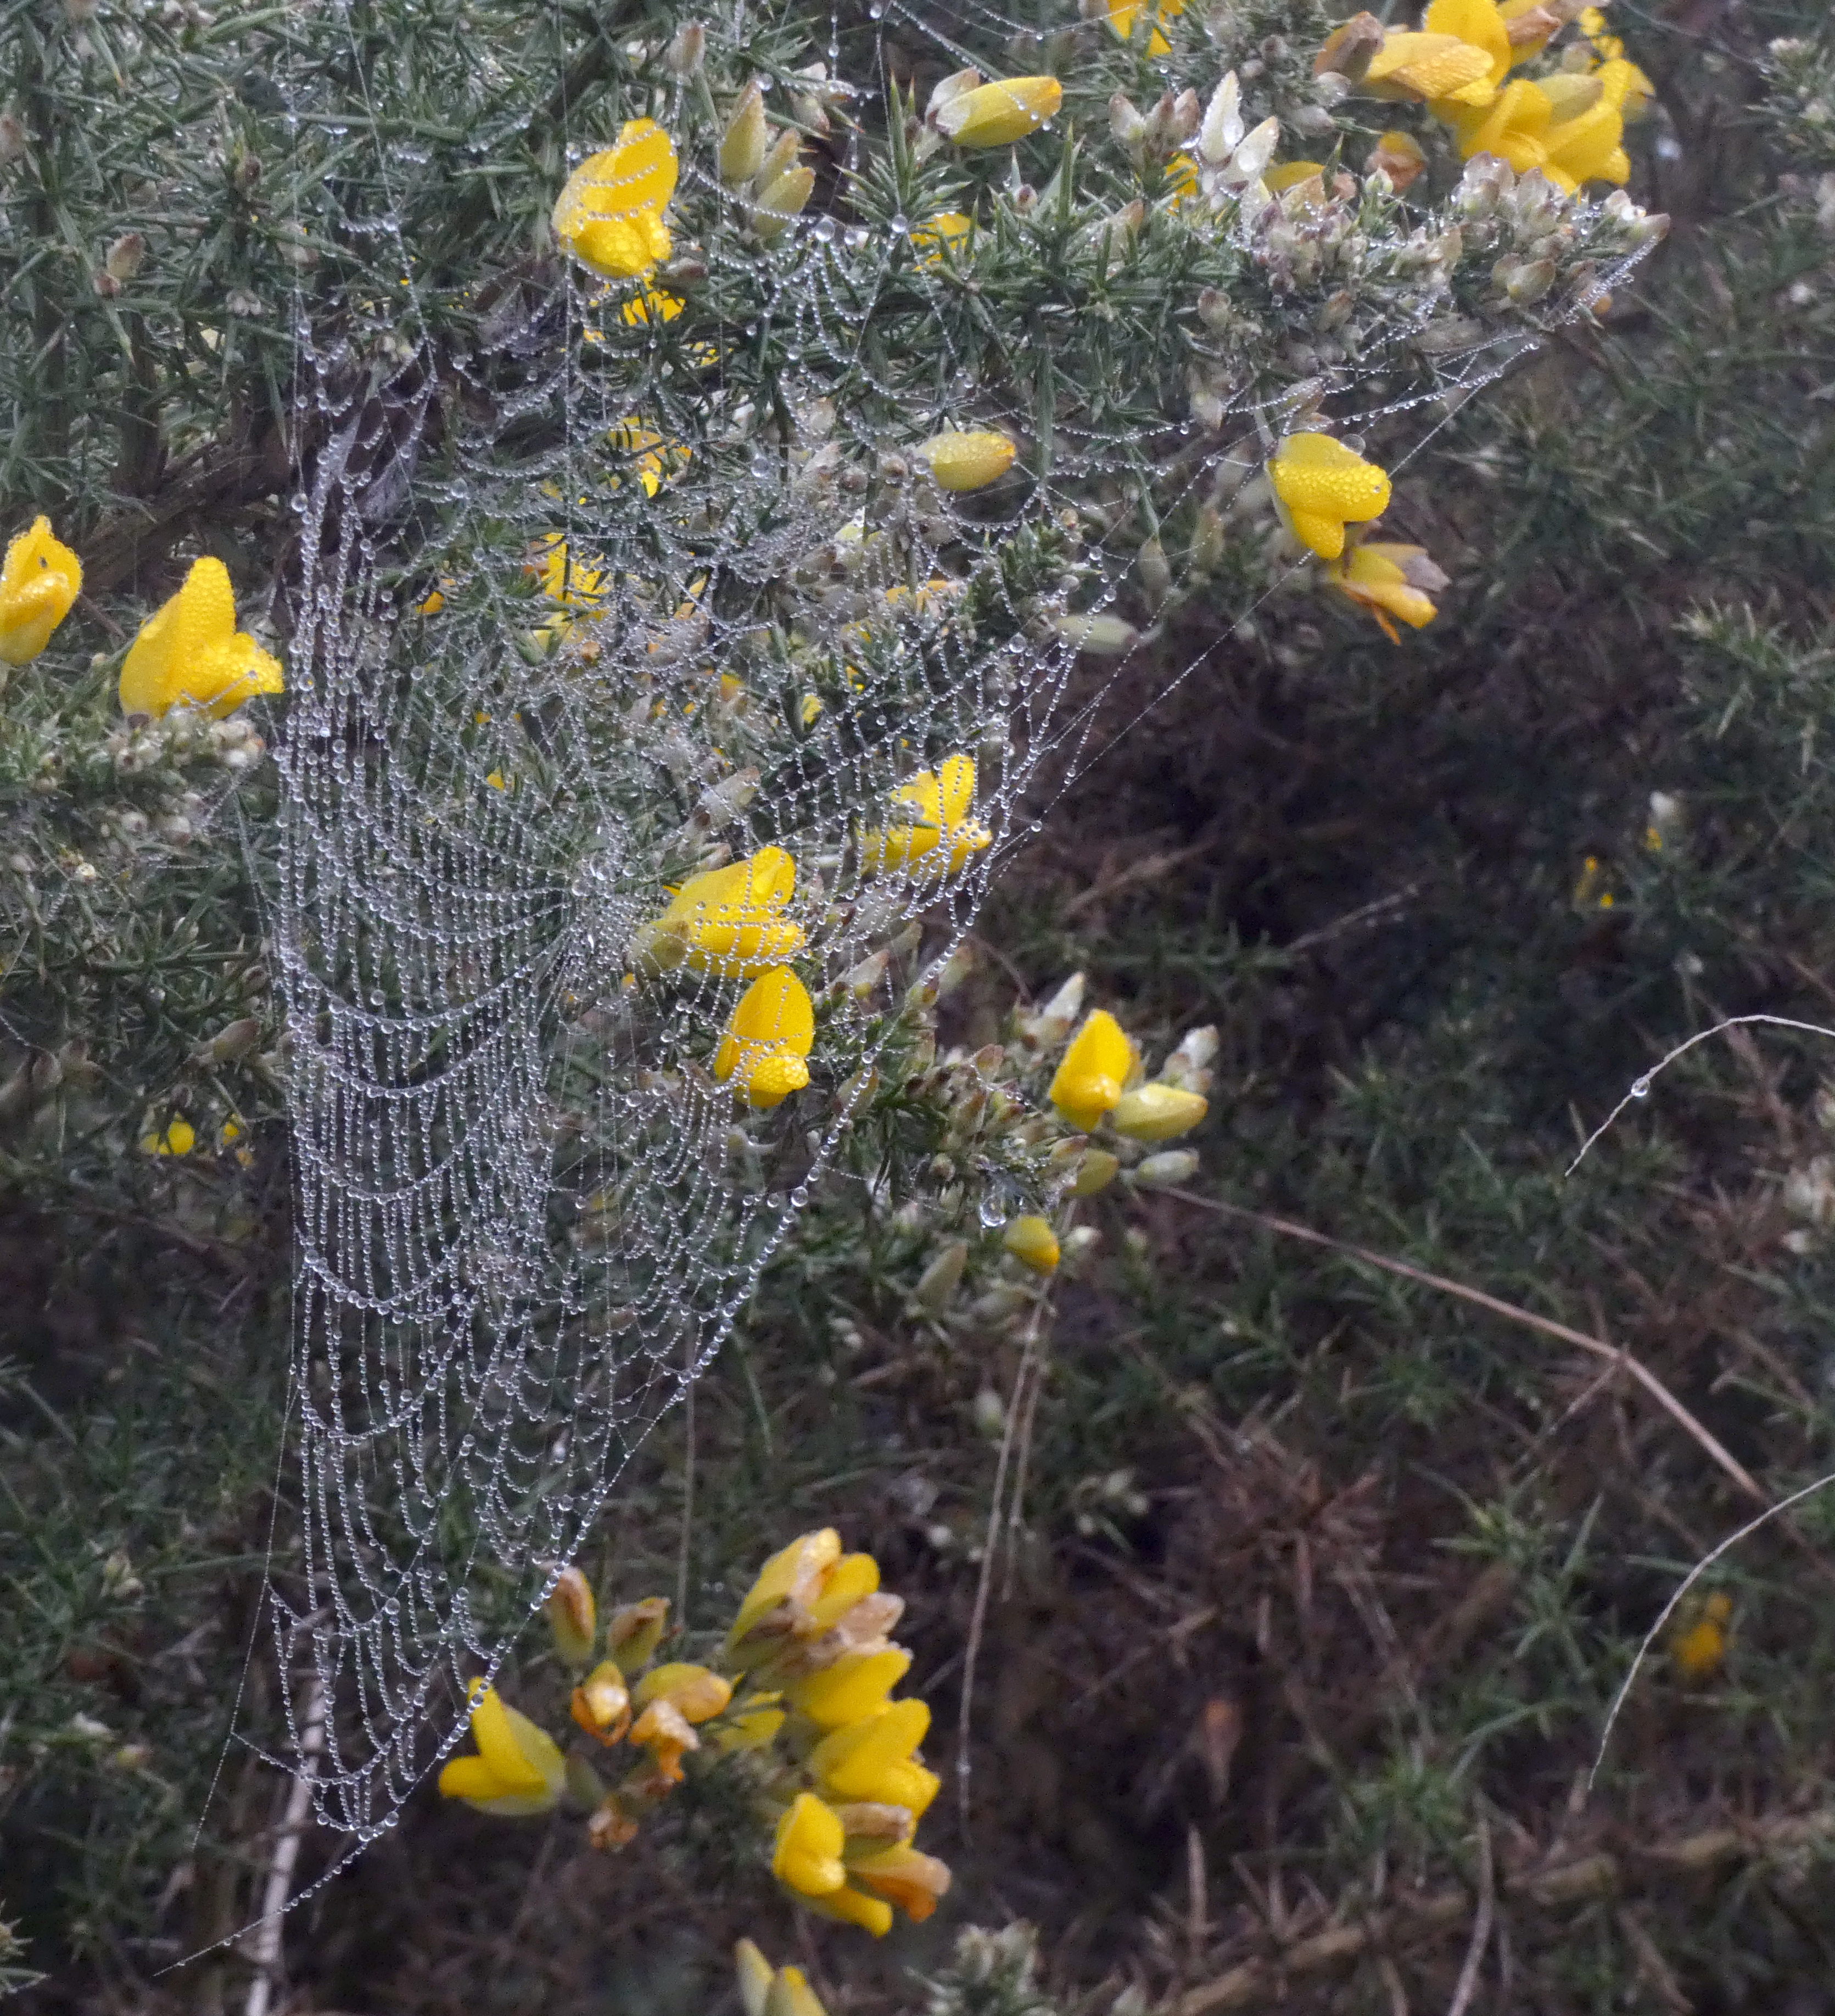 Spider Web On Gorse, St Aidan's, 29th November 2022